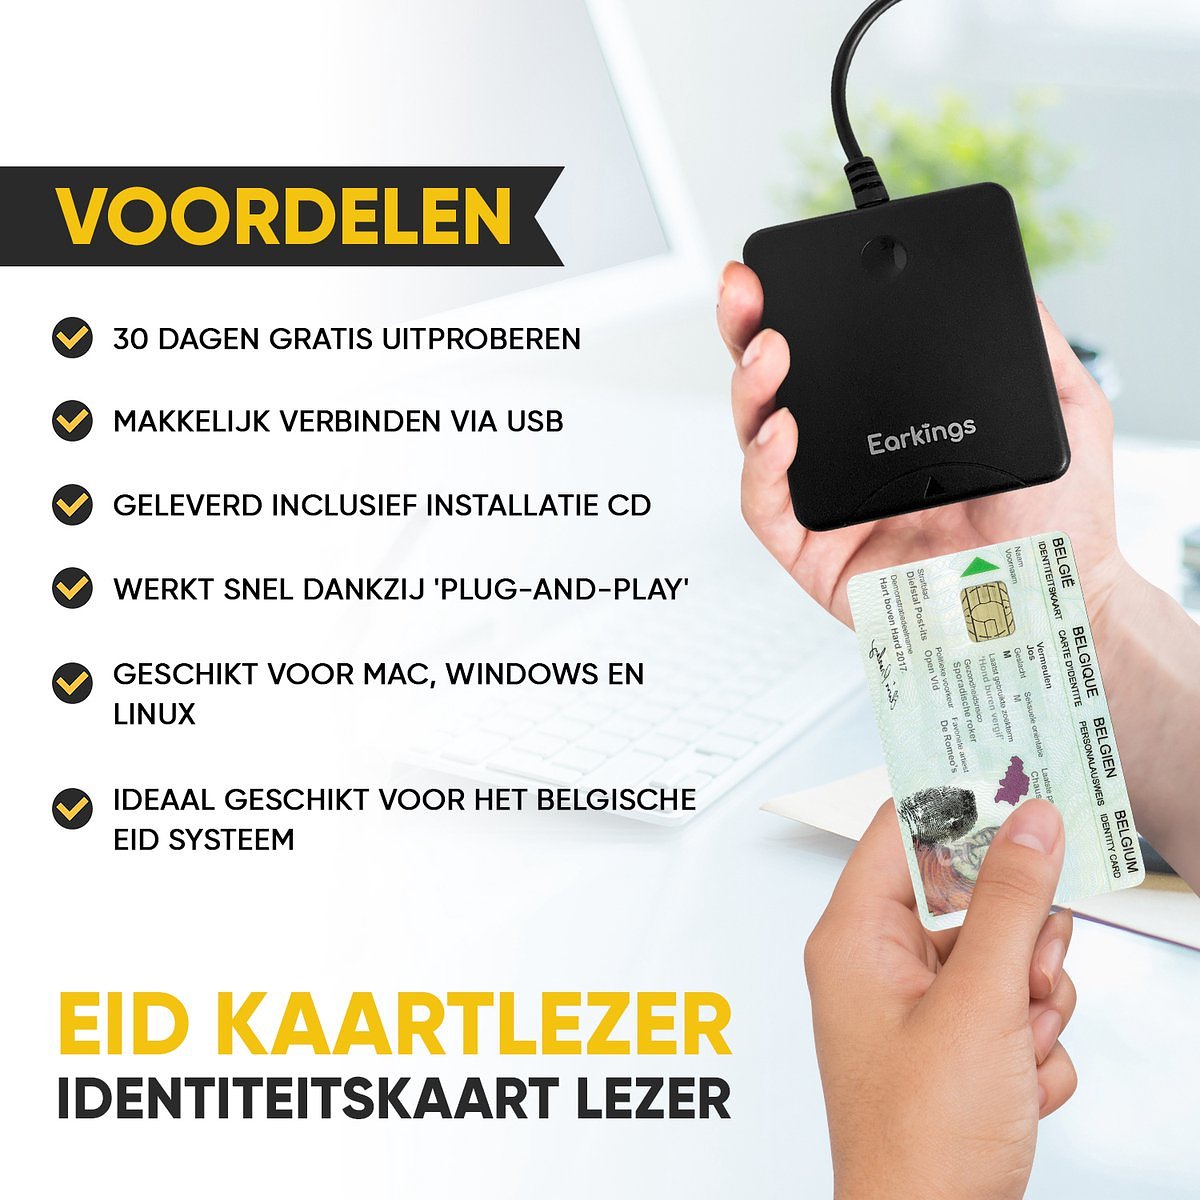 eID Kaartlezer Identiteitskaartlezer - Card Reader voor Identiteitskaart, CreditCards en overige